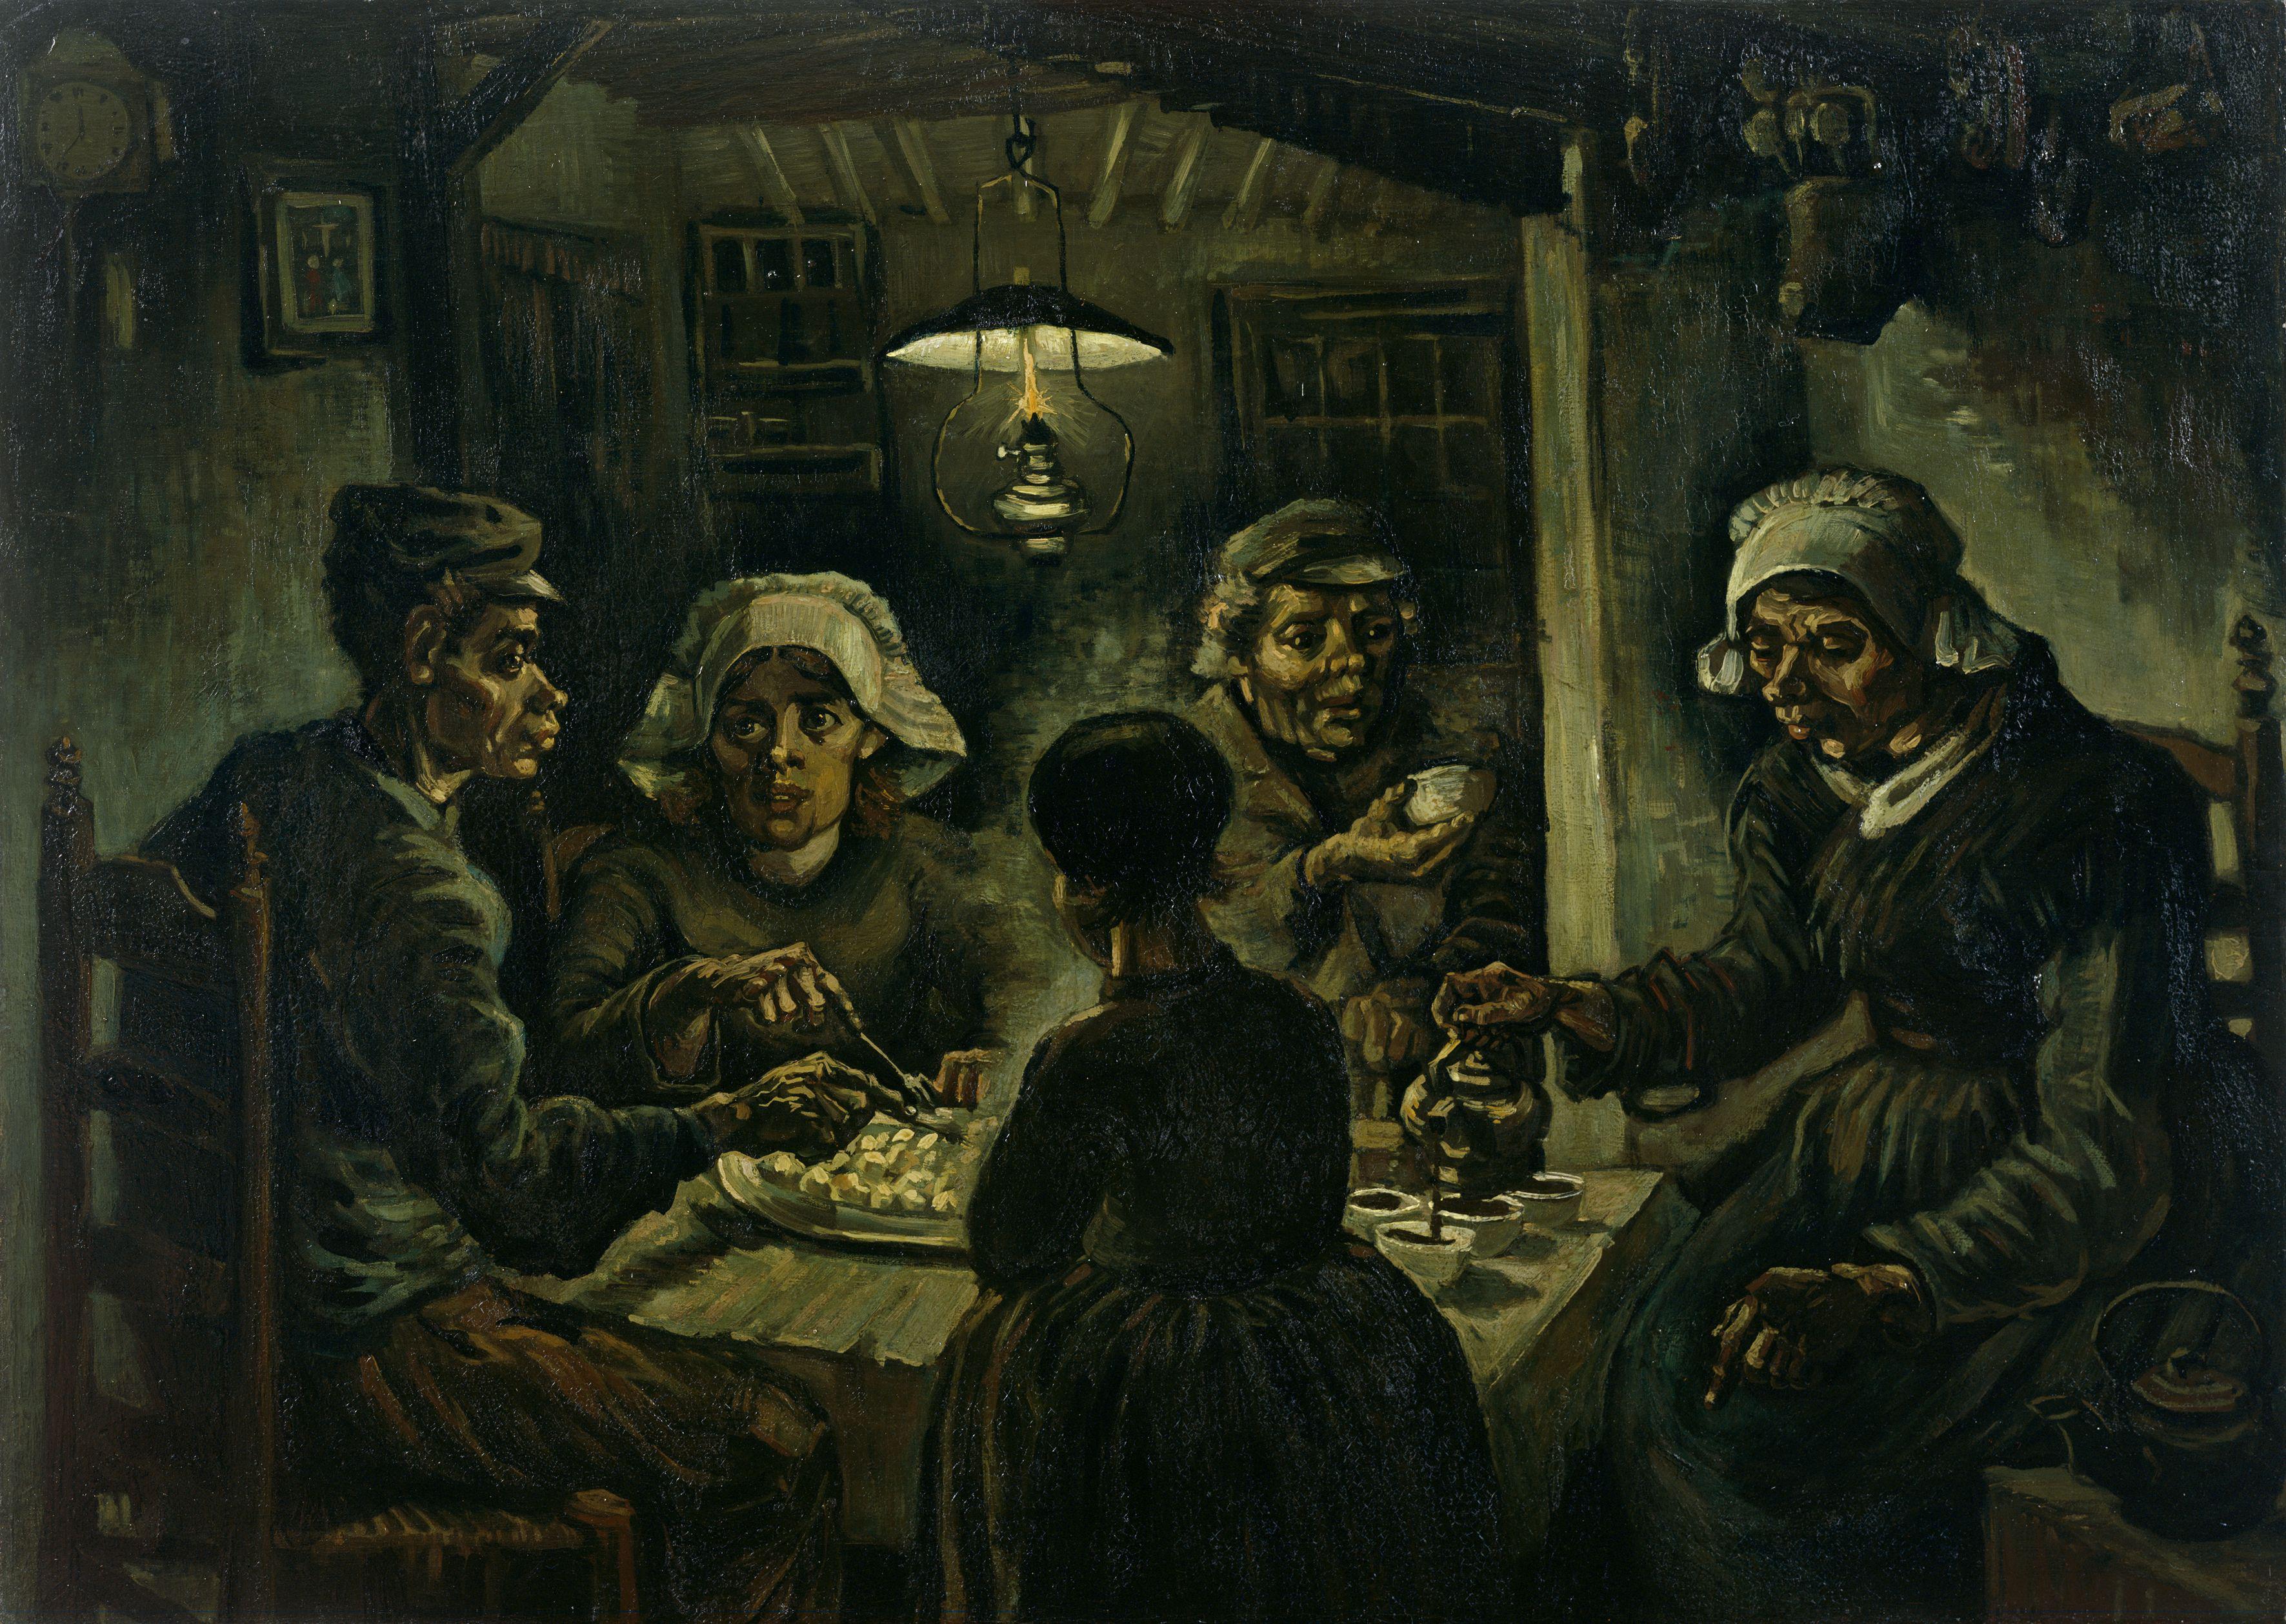 The Potato Eaters by Van Gogh, 1885, via Wikipedia